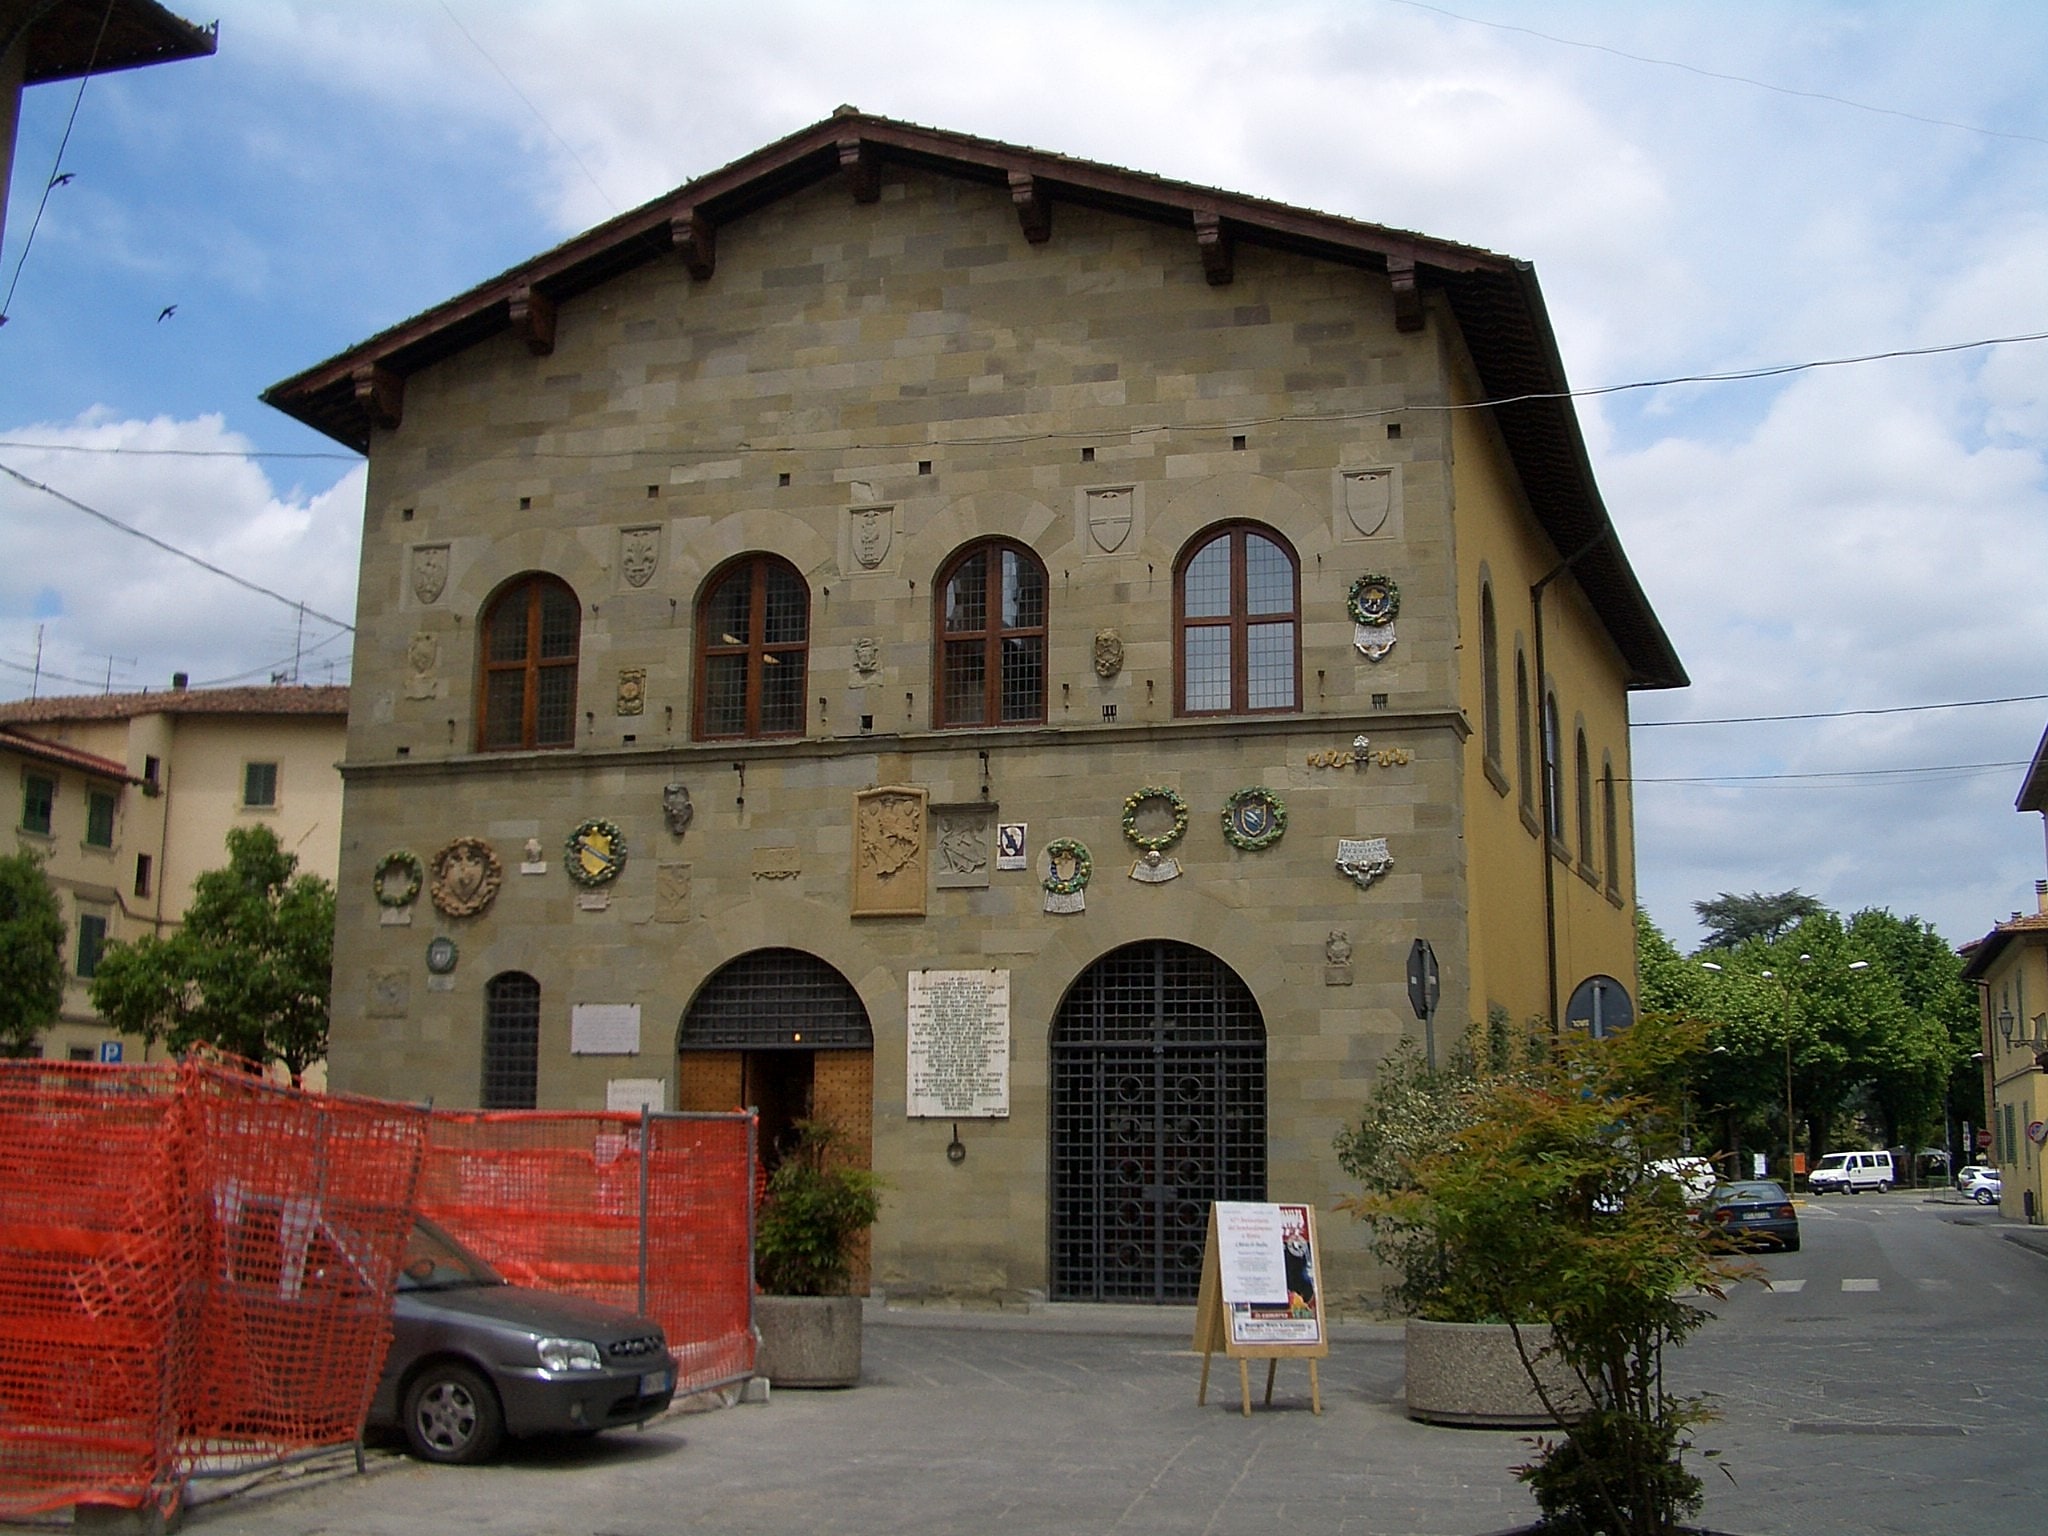 Borgo San Lorenzo, Italy